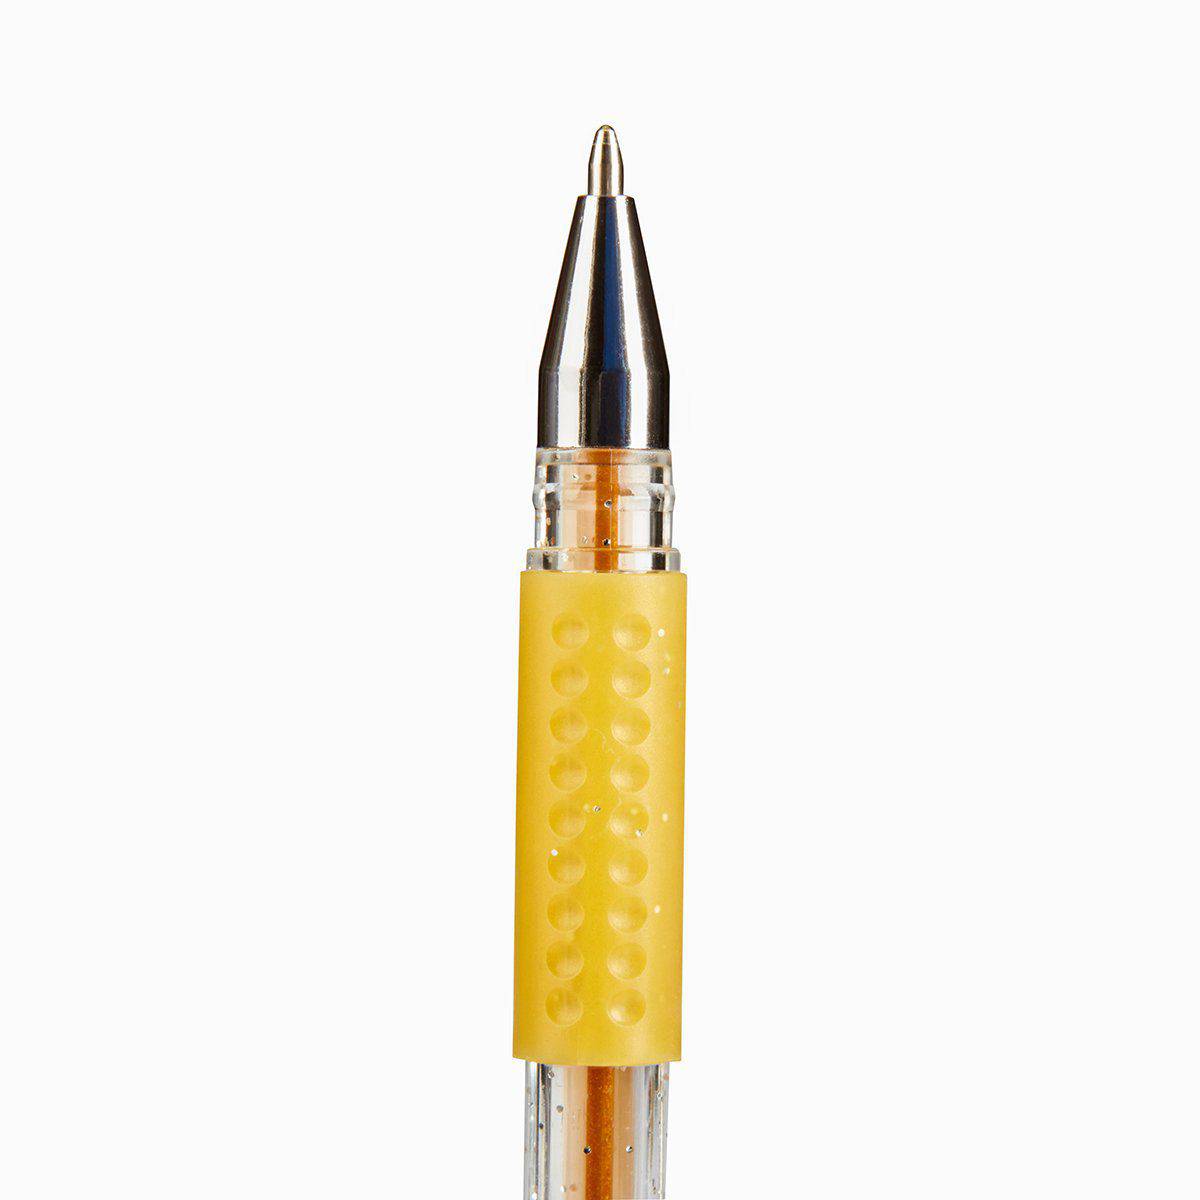 KINGART® Soft Grip Earth Tone Gel Pens, 2.0mm Ink Cartridge, Set of 24  Unique Colors